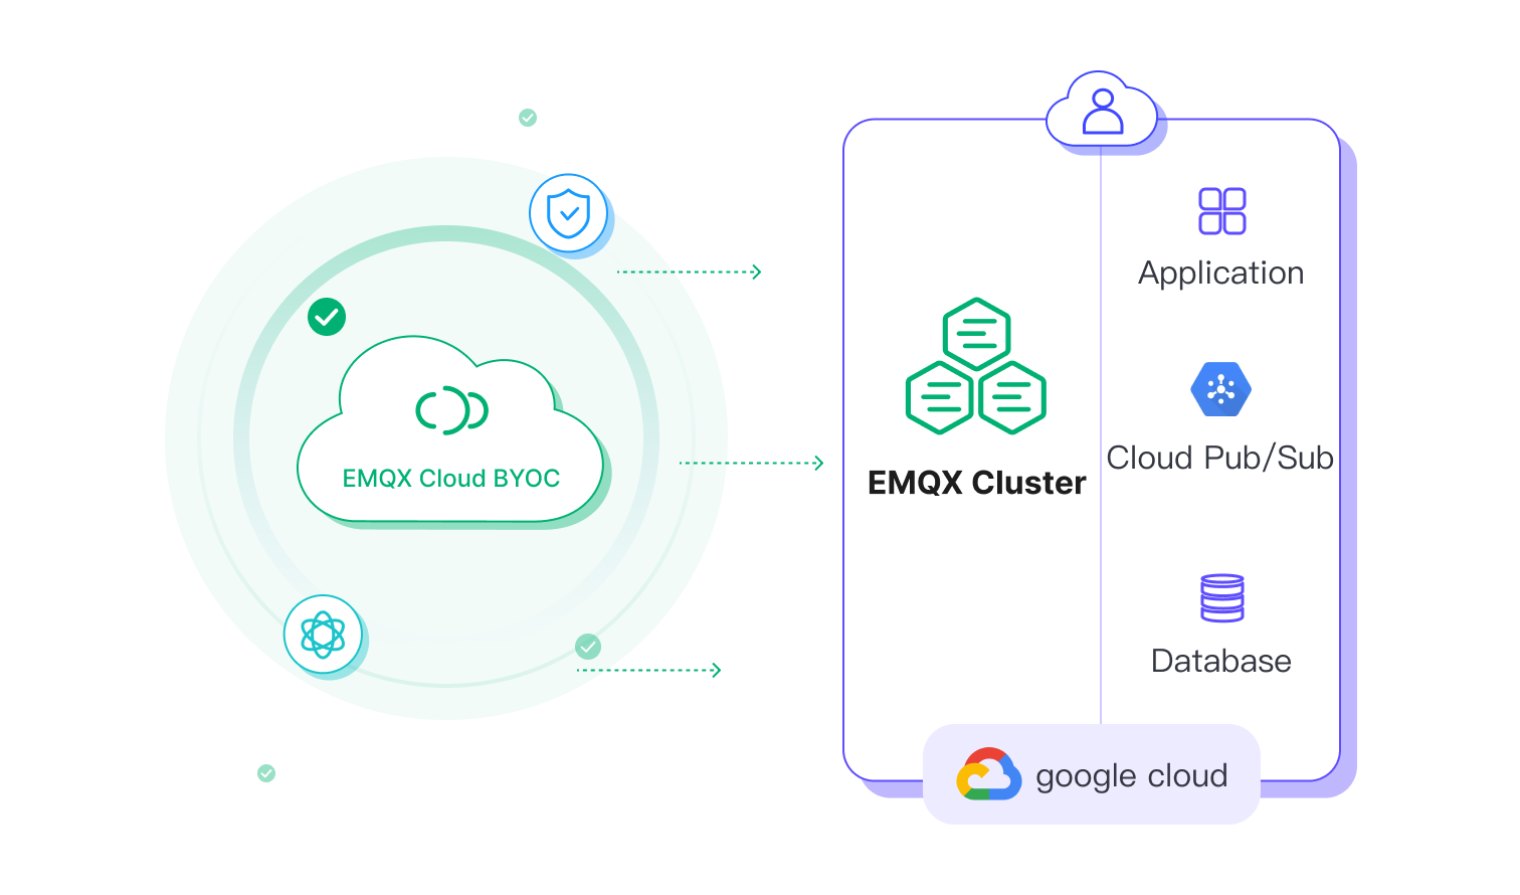 Google Cloud'da EMQX Cloud BYOC